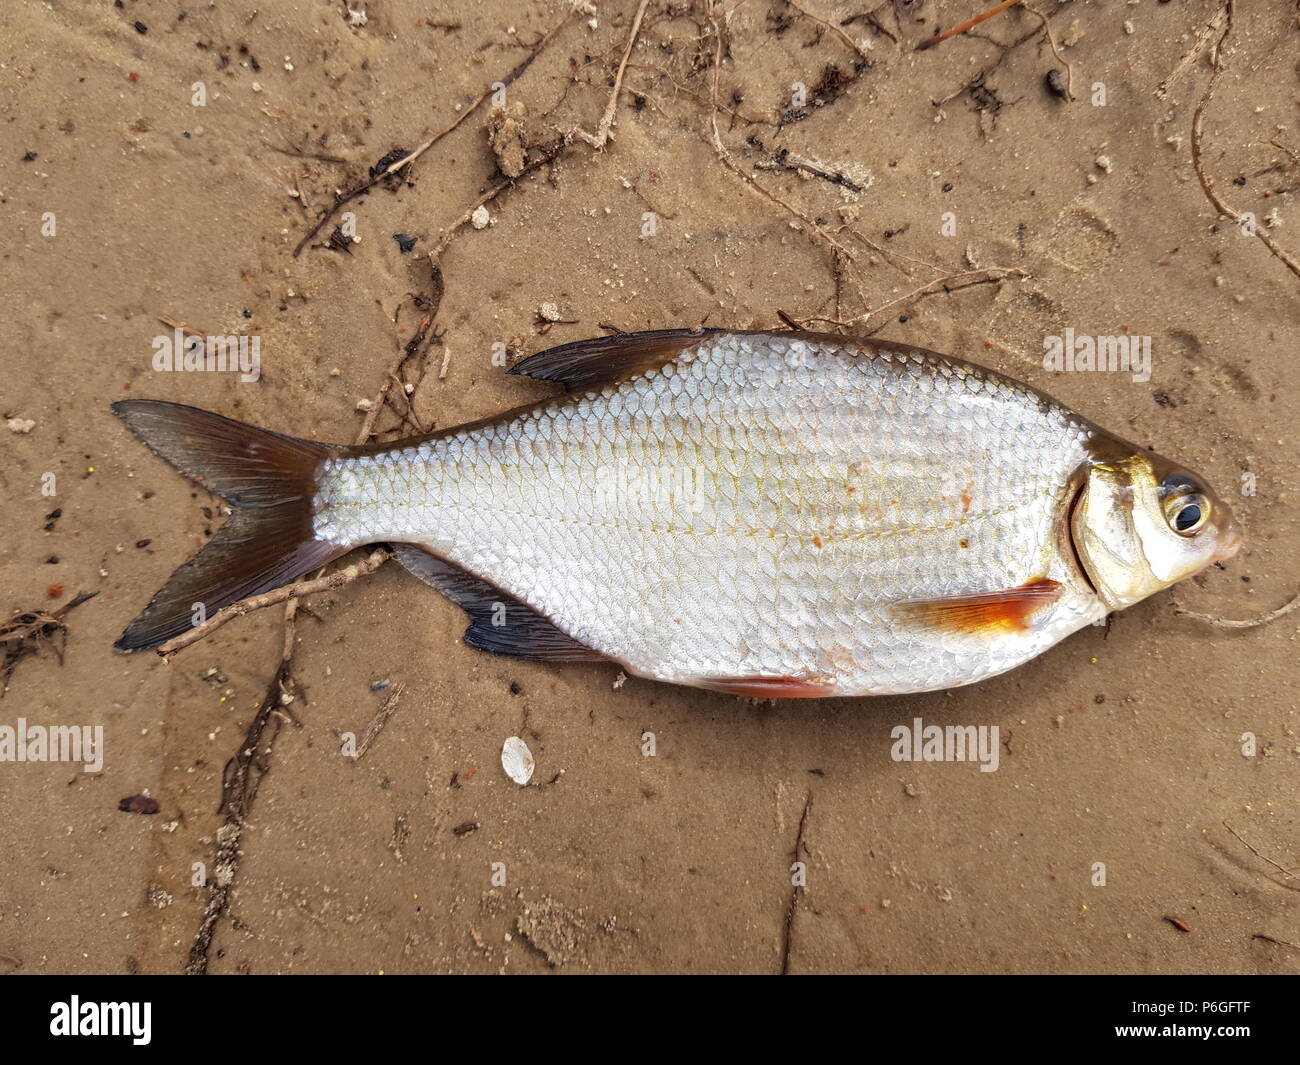 Fishing catch. River fish Blicca bjoerkna.Top view Stock Photo